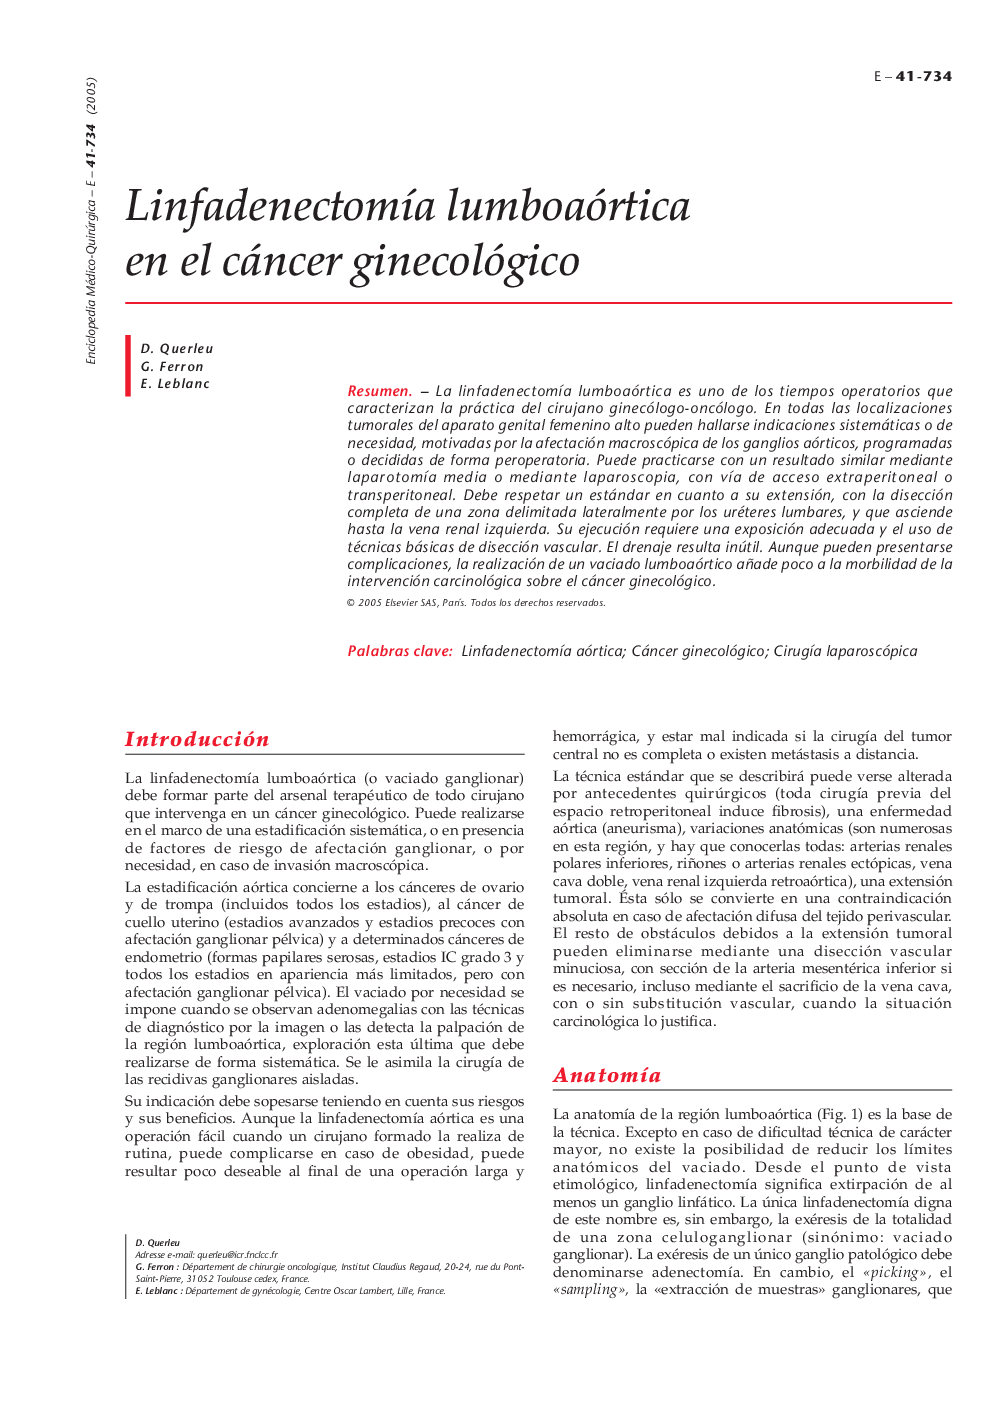 LinfadenectomÃ­a lumboaórtica en el cáncer ginecológico